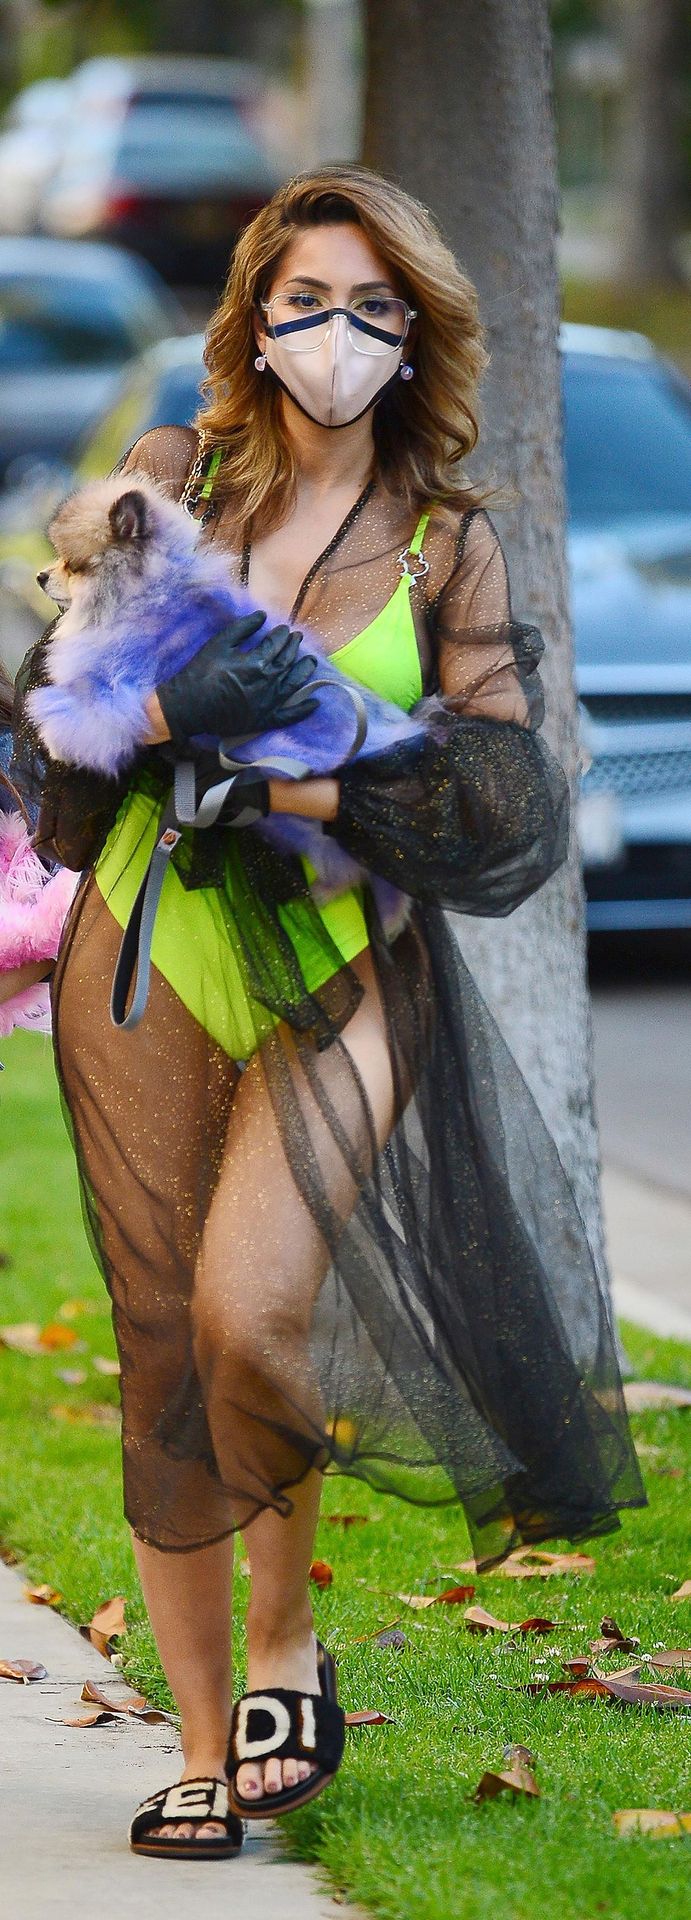 Farrah Abraham Reveals All in a Skimpy Bikini and Tutu (24 Photos)